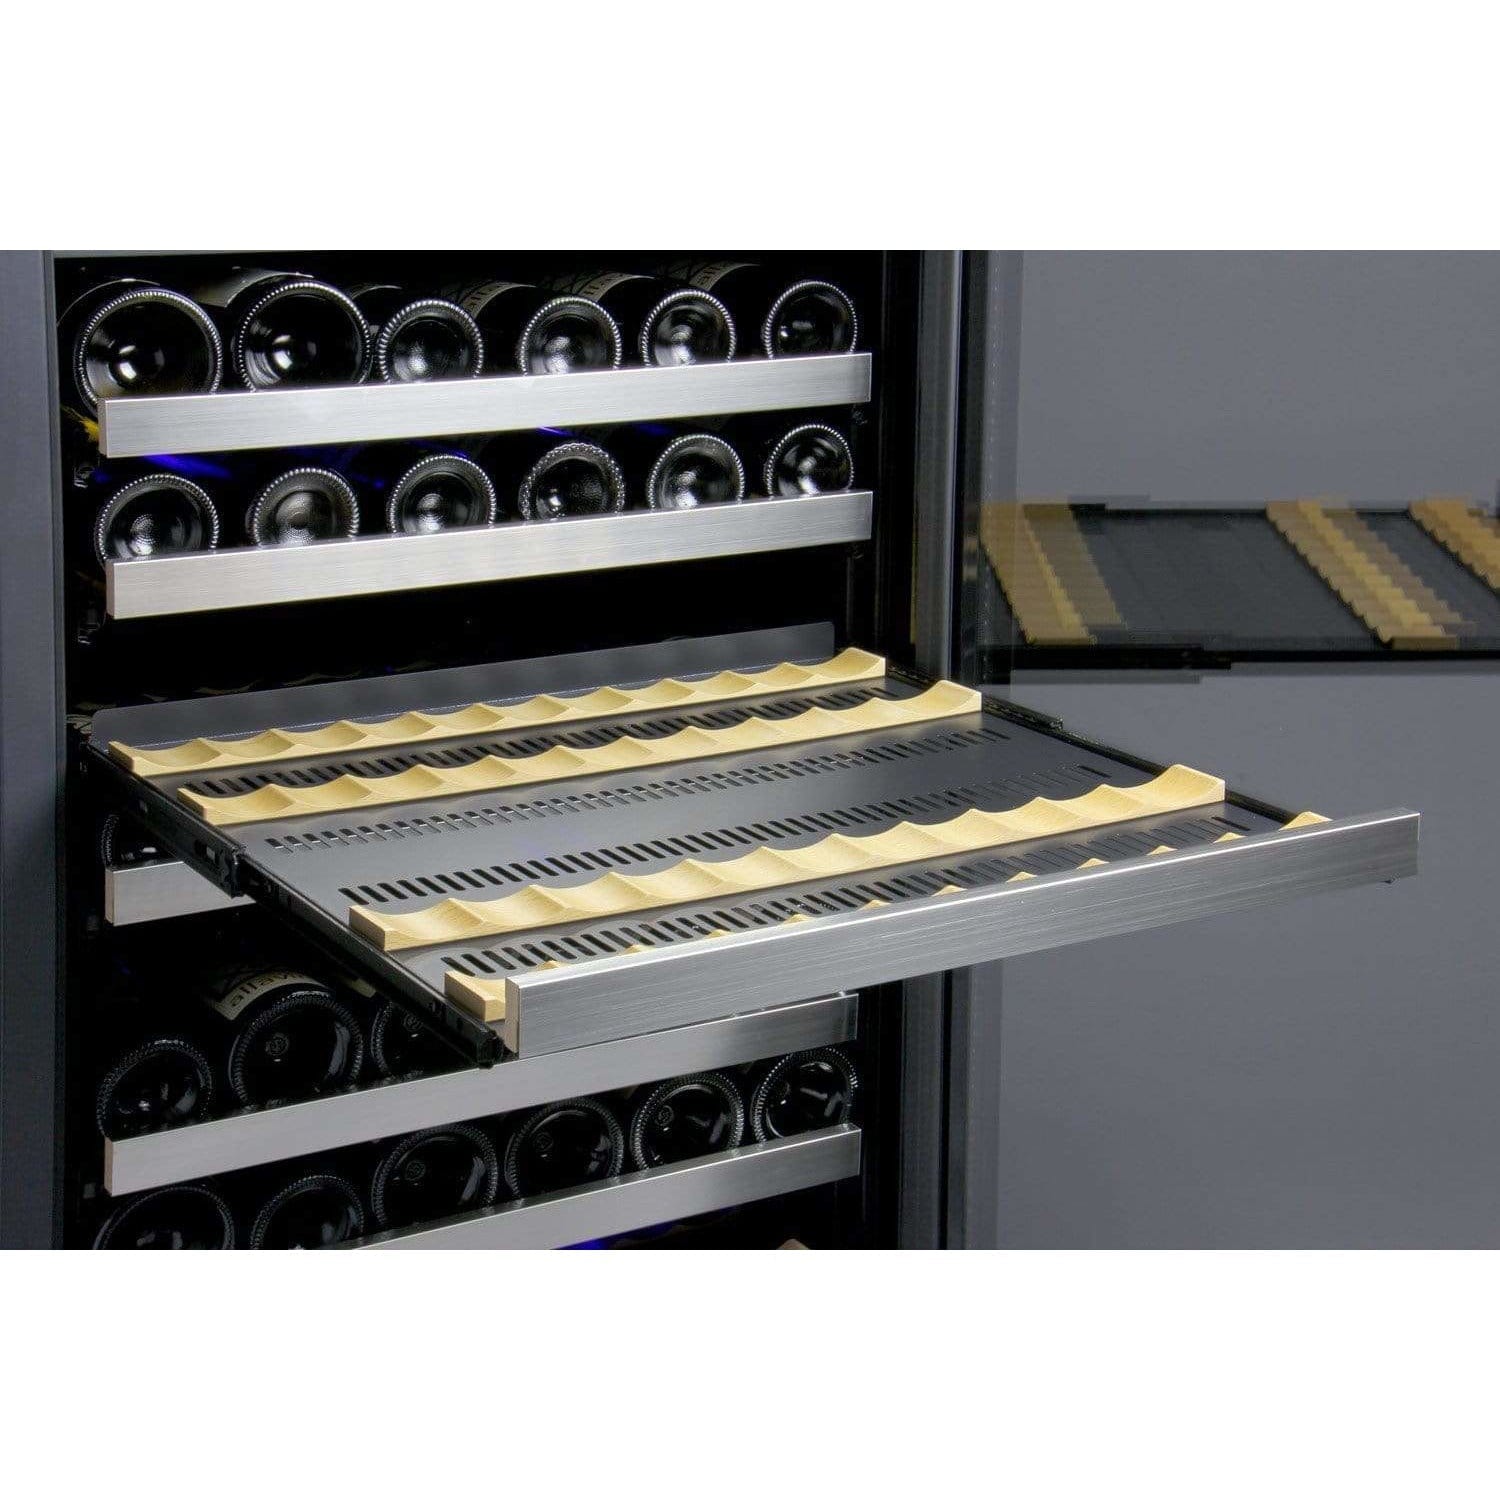 Allavino 121 Bottle  FlexCount II Tru-Vino Dual Zone Stainless Steel Left Hinge Wine Cooler VSWR121-2SL20 - Allavino | Wine Coolers Empire - Trusted Dealer